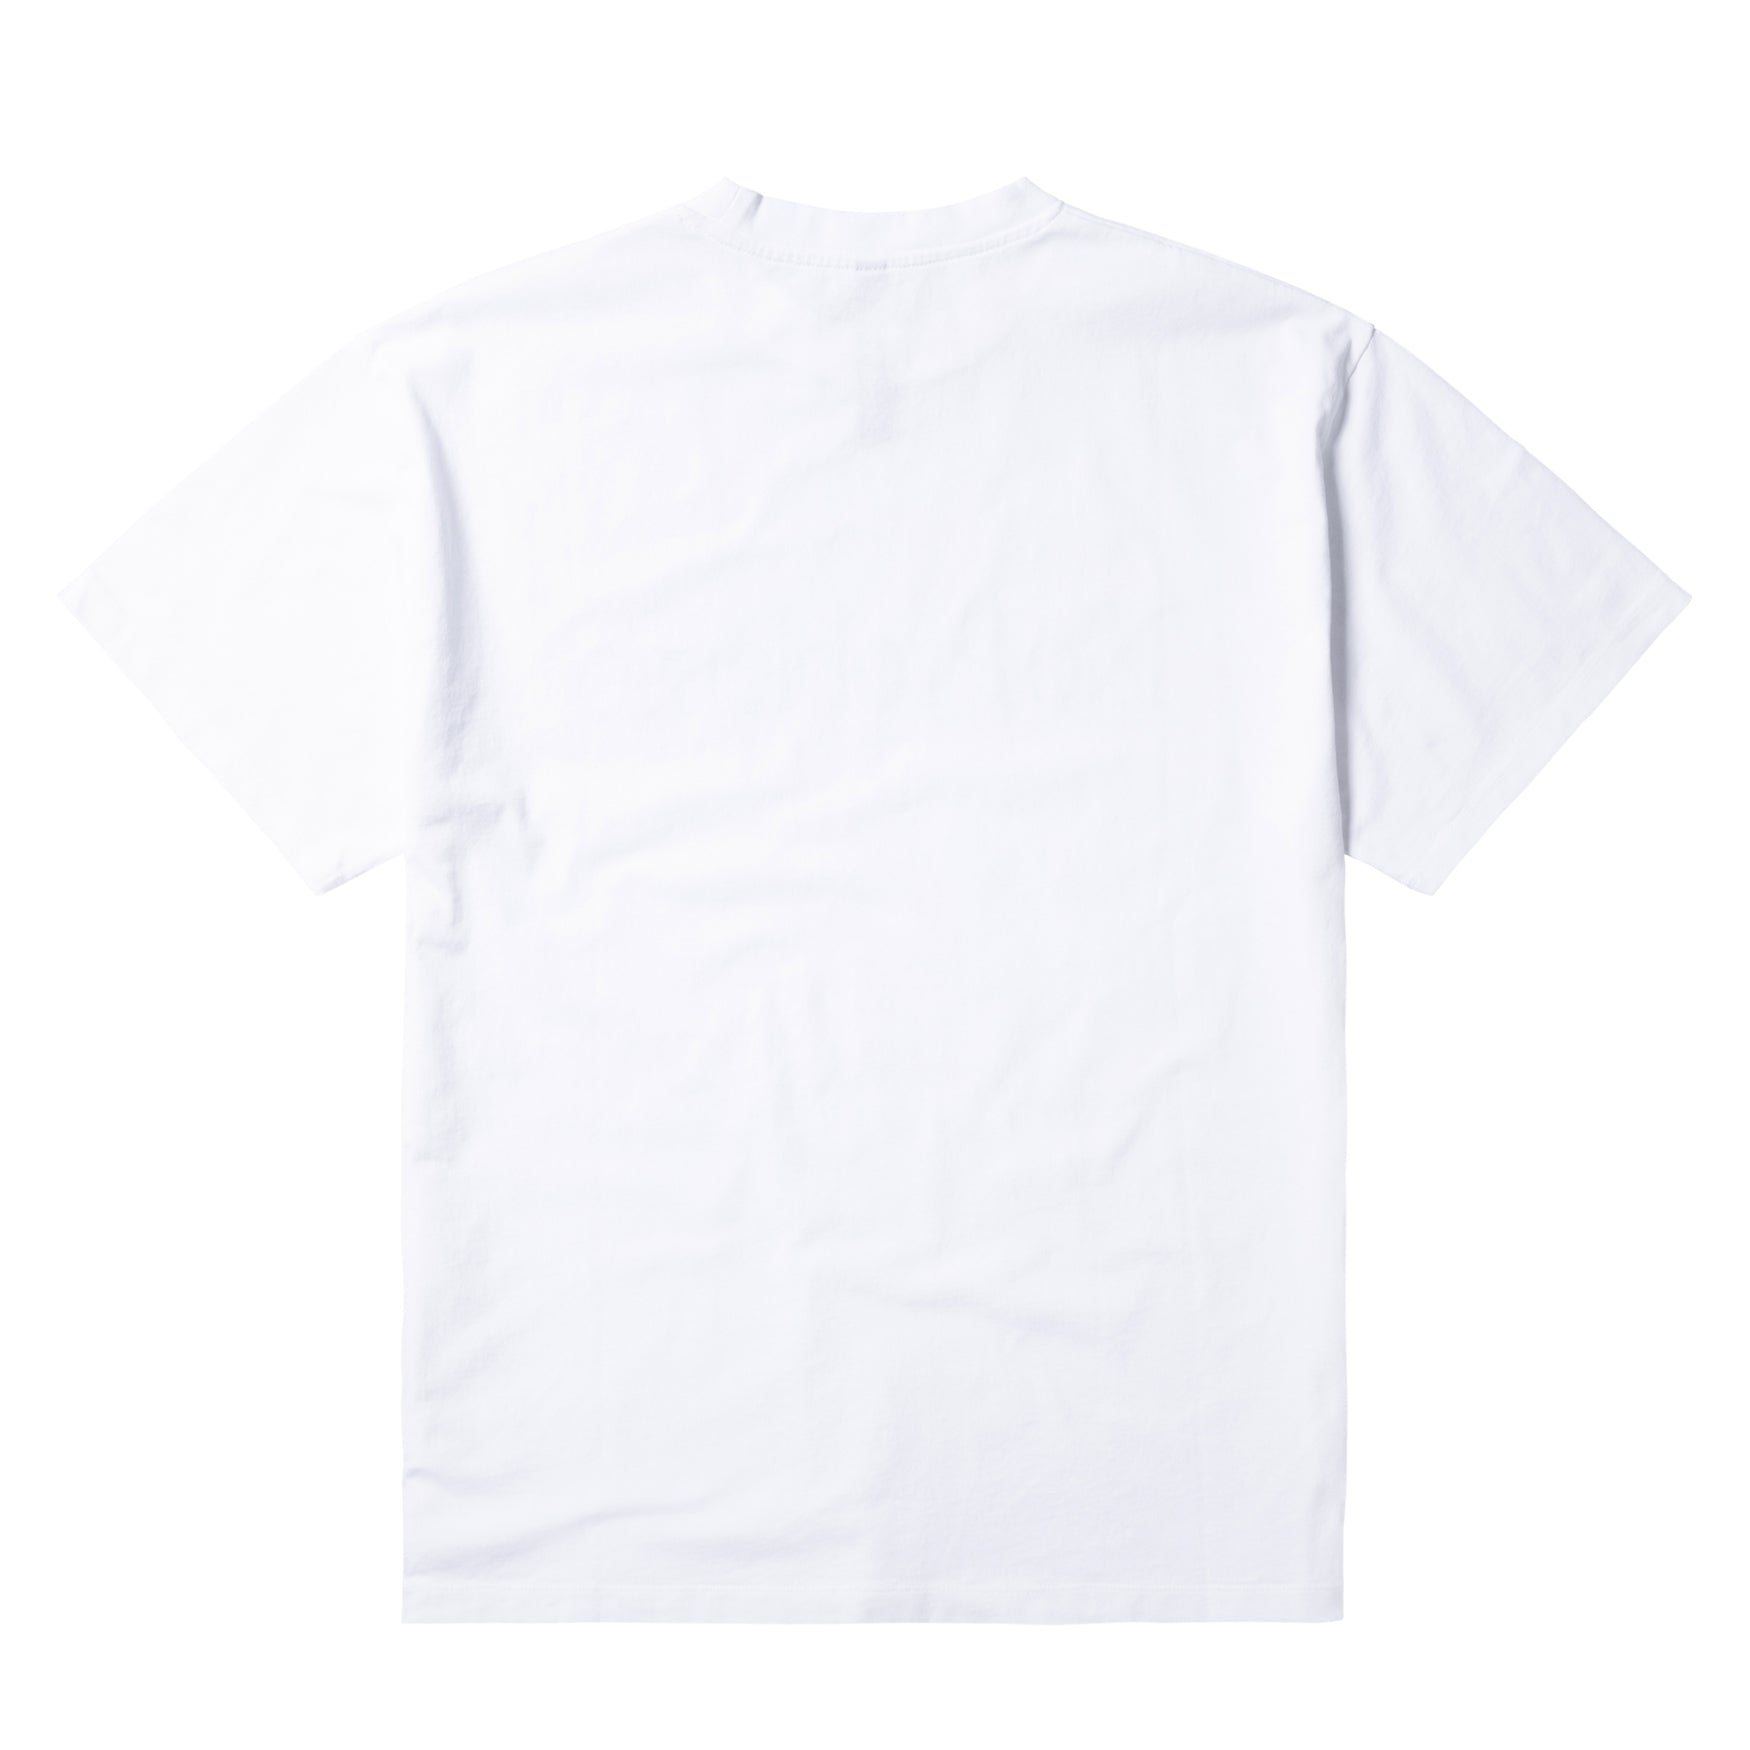 Giuseppe Zanotti embroidered logo cotton T-shirt Weiß